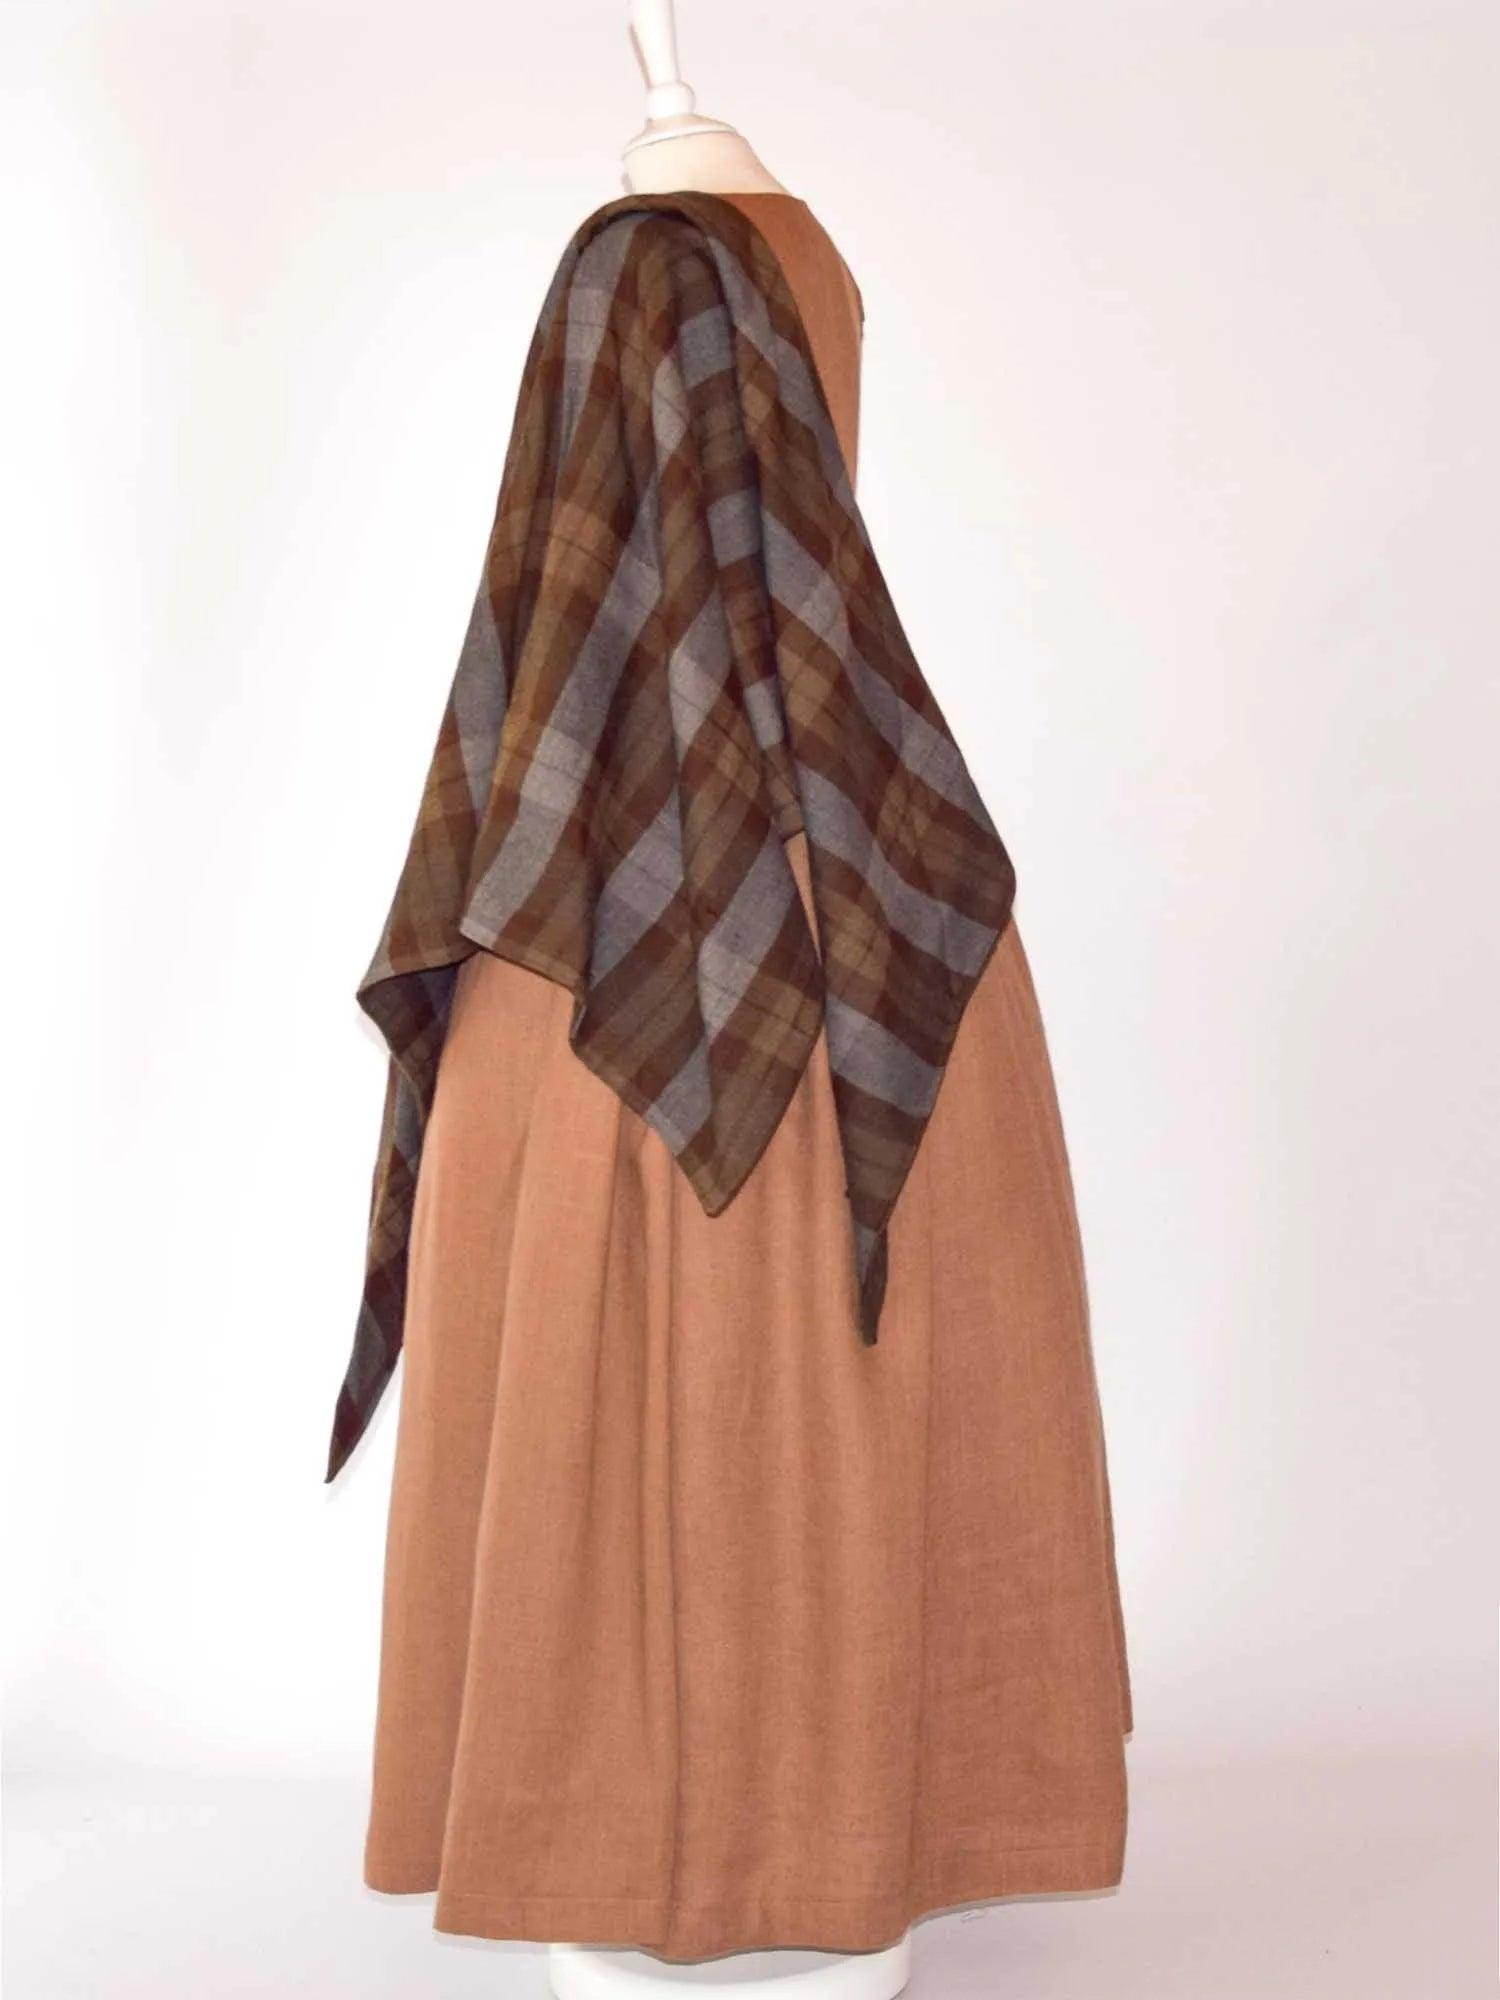 Historical Costume in Toffee Linen & Outlander Tartan Shawl - Atelier Serraspina